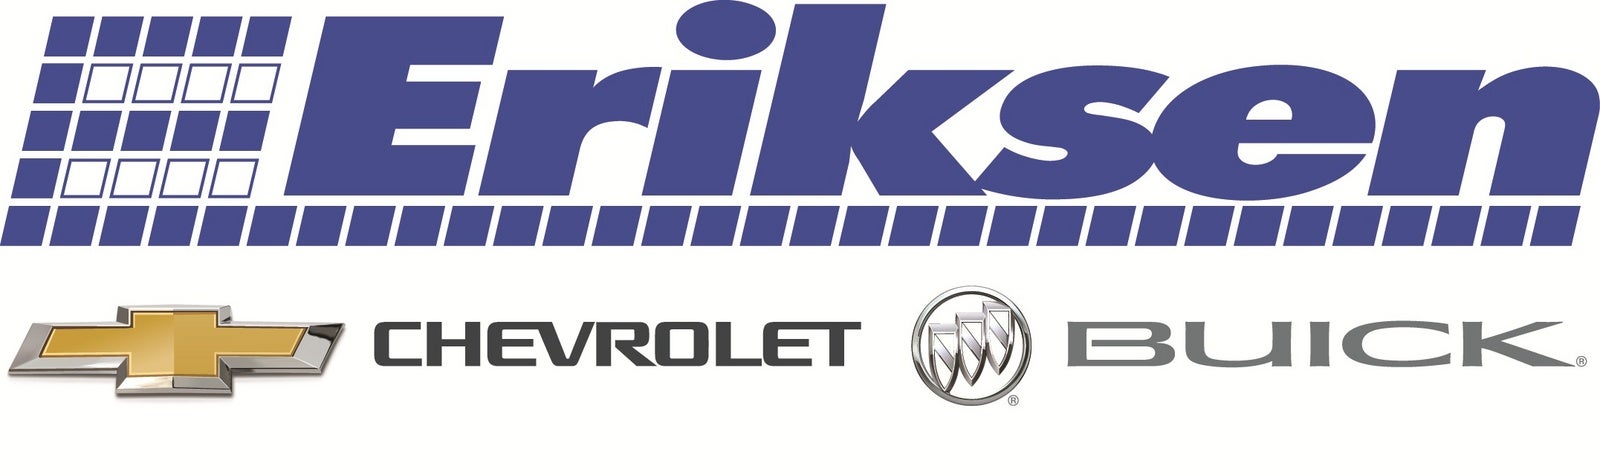 Eriksen Chevrolet In Milan Illinois / Eriksen Chevrolet Trucks For Sale